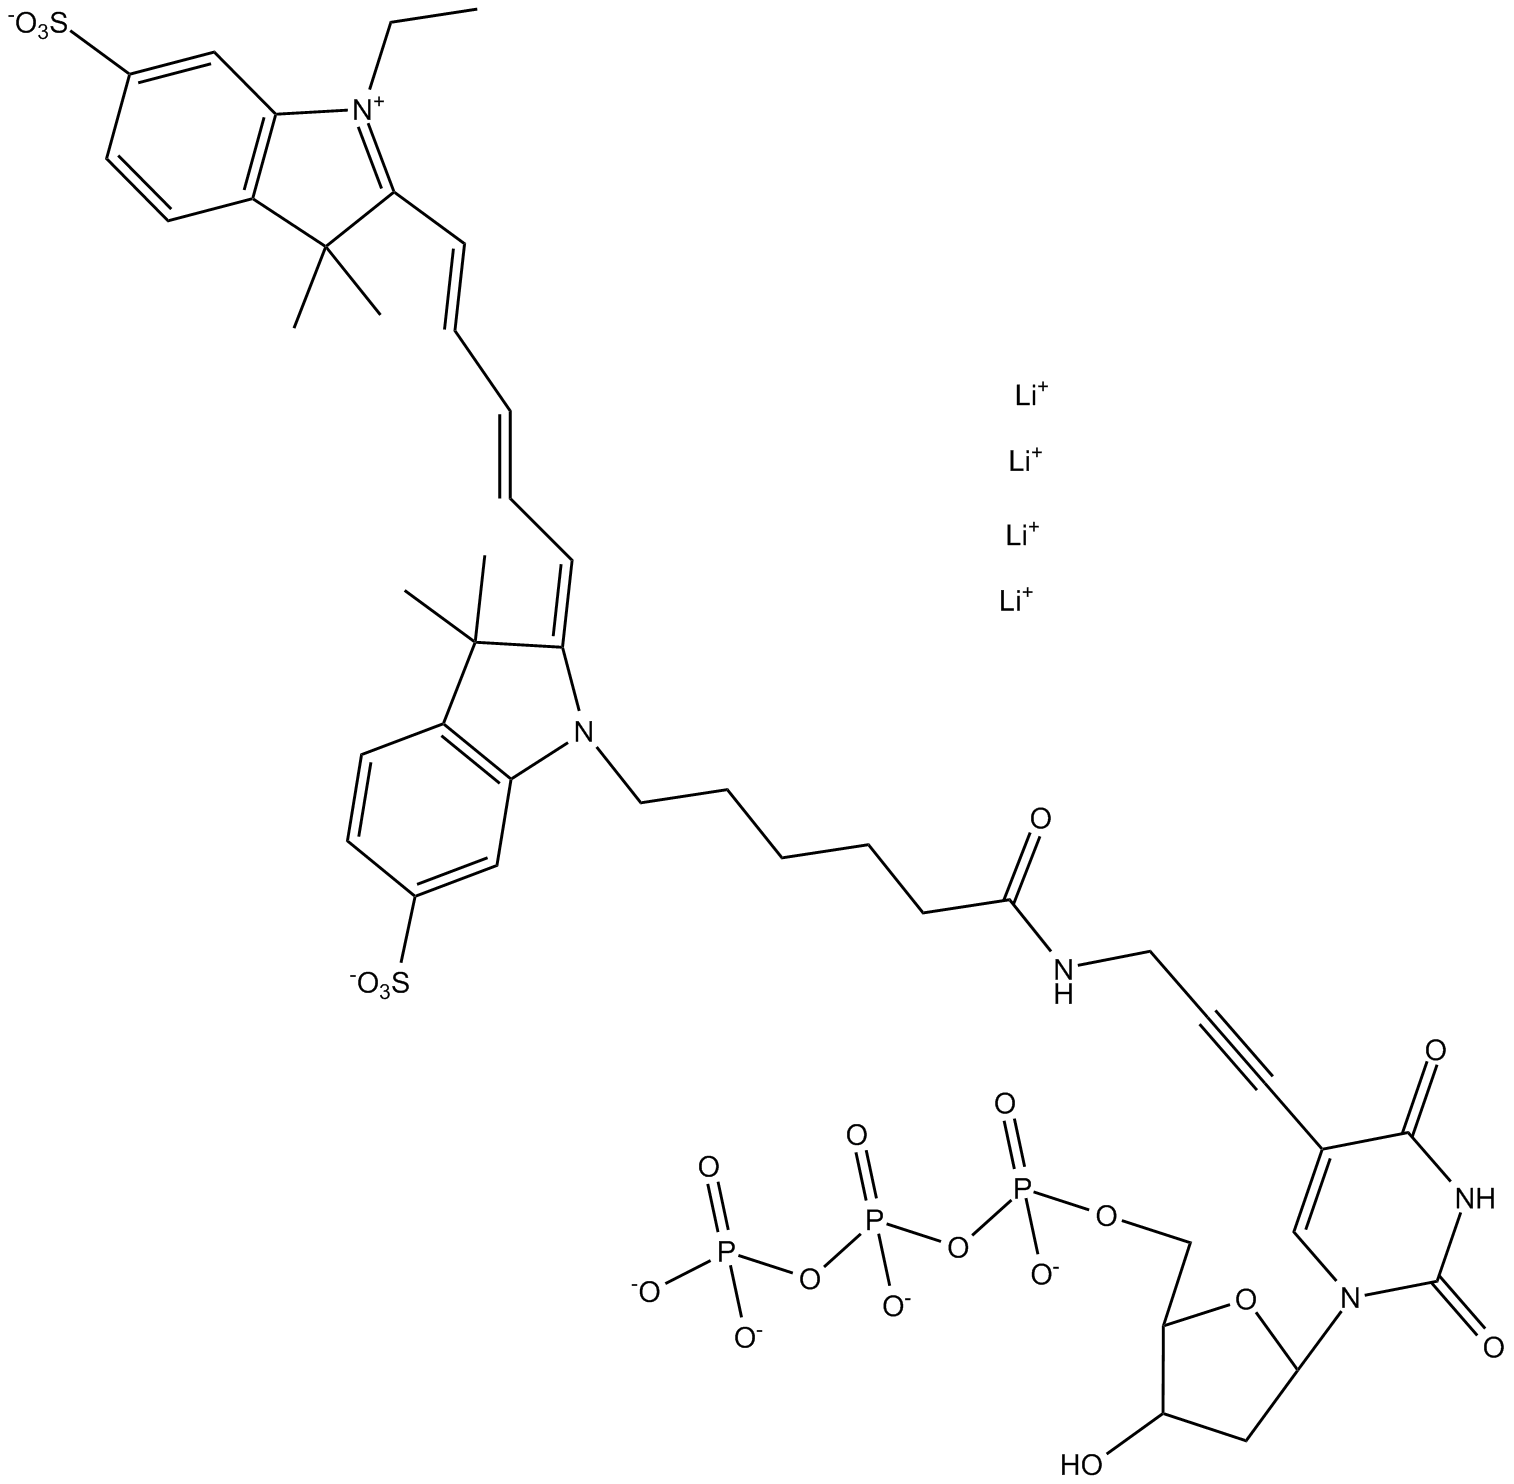 Cyanine 5-dUTP